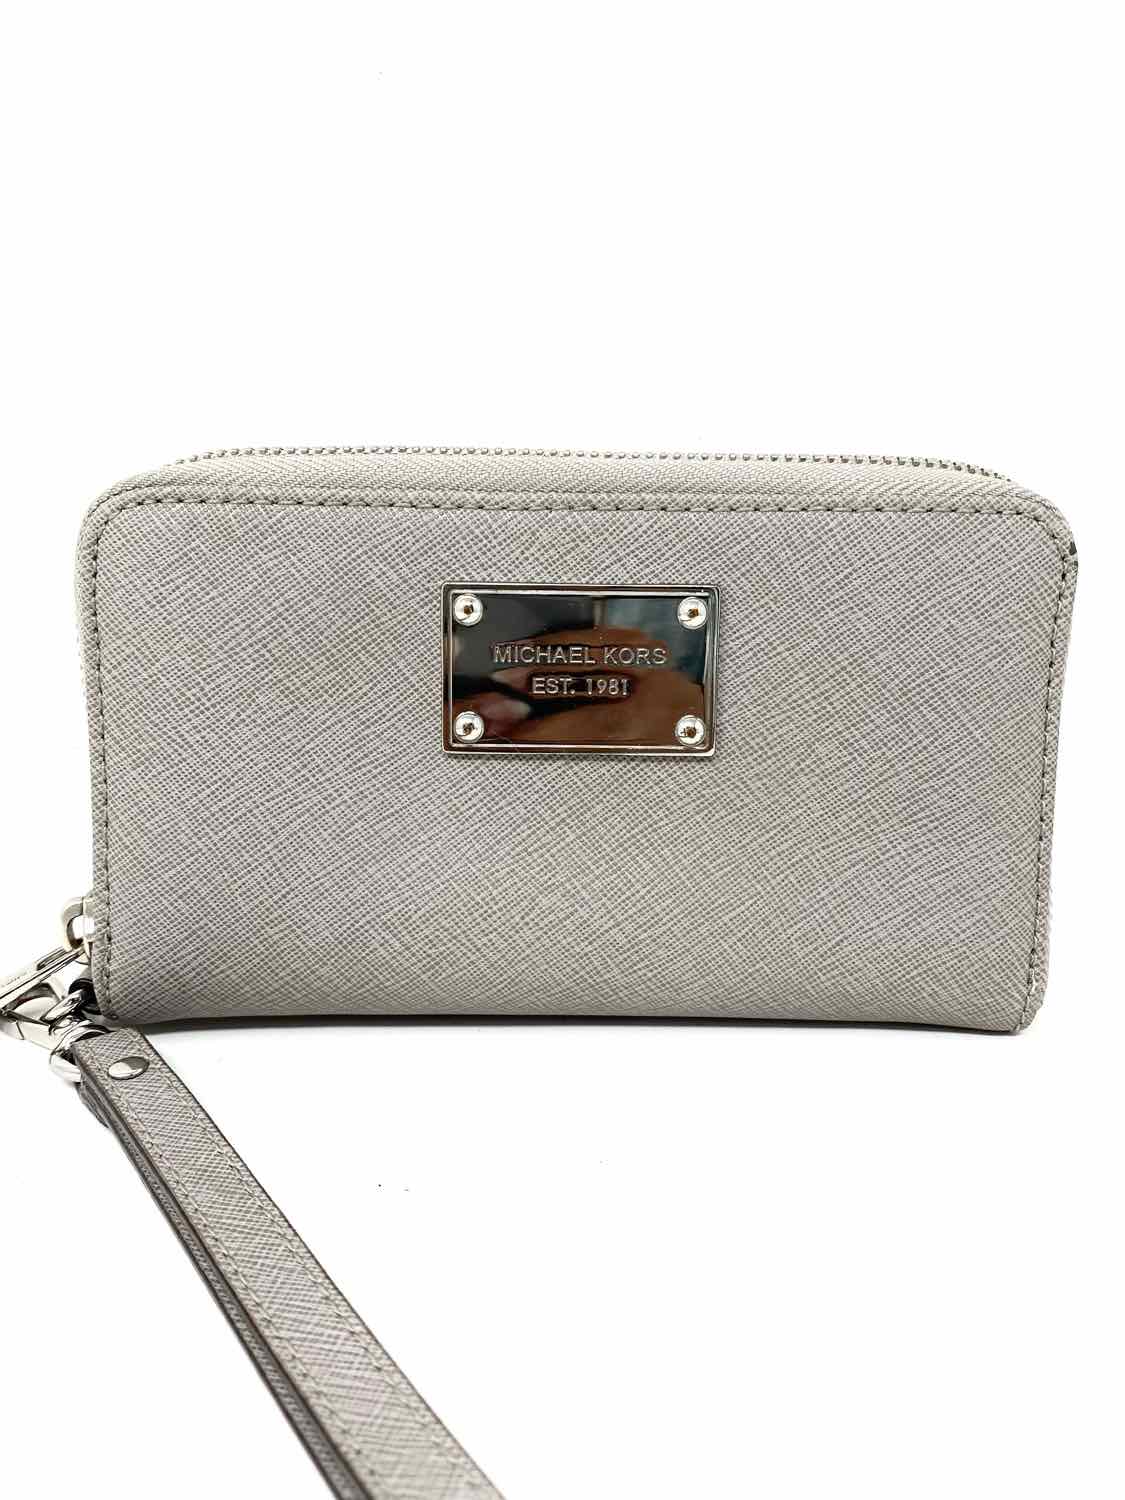 Michael Kors Double Zip Phone Wallet Wristlet Vanilla Signature MK Mulberry  196163452562 | eBay